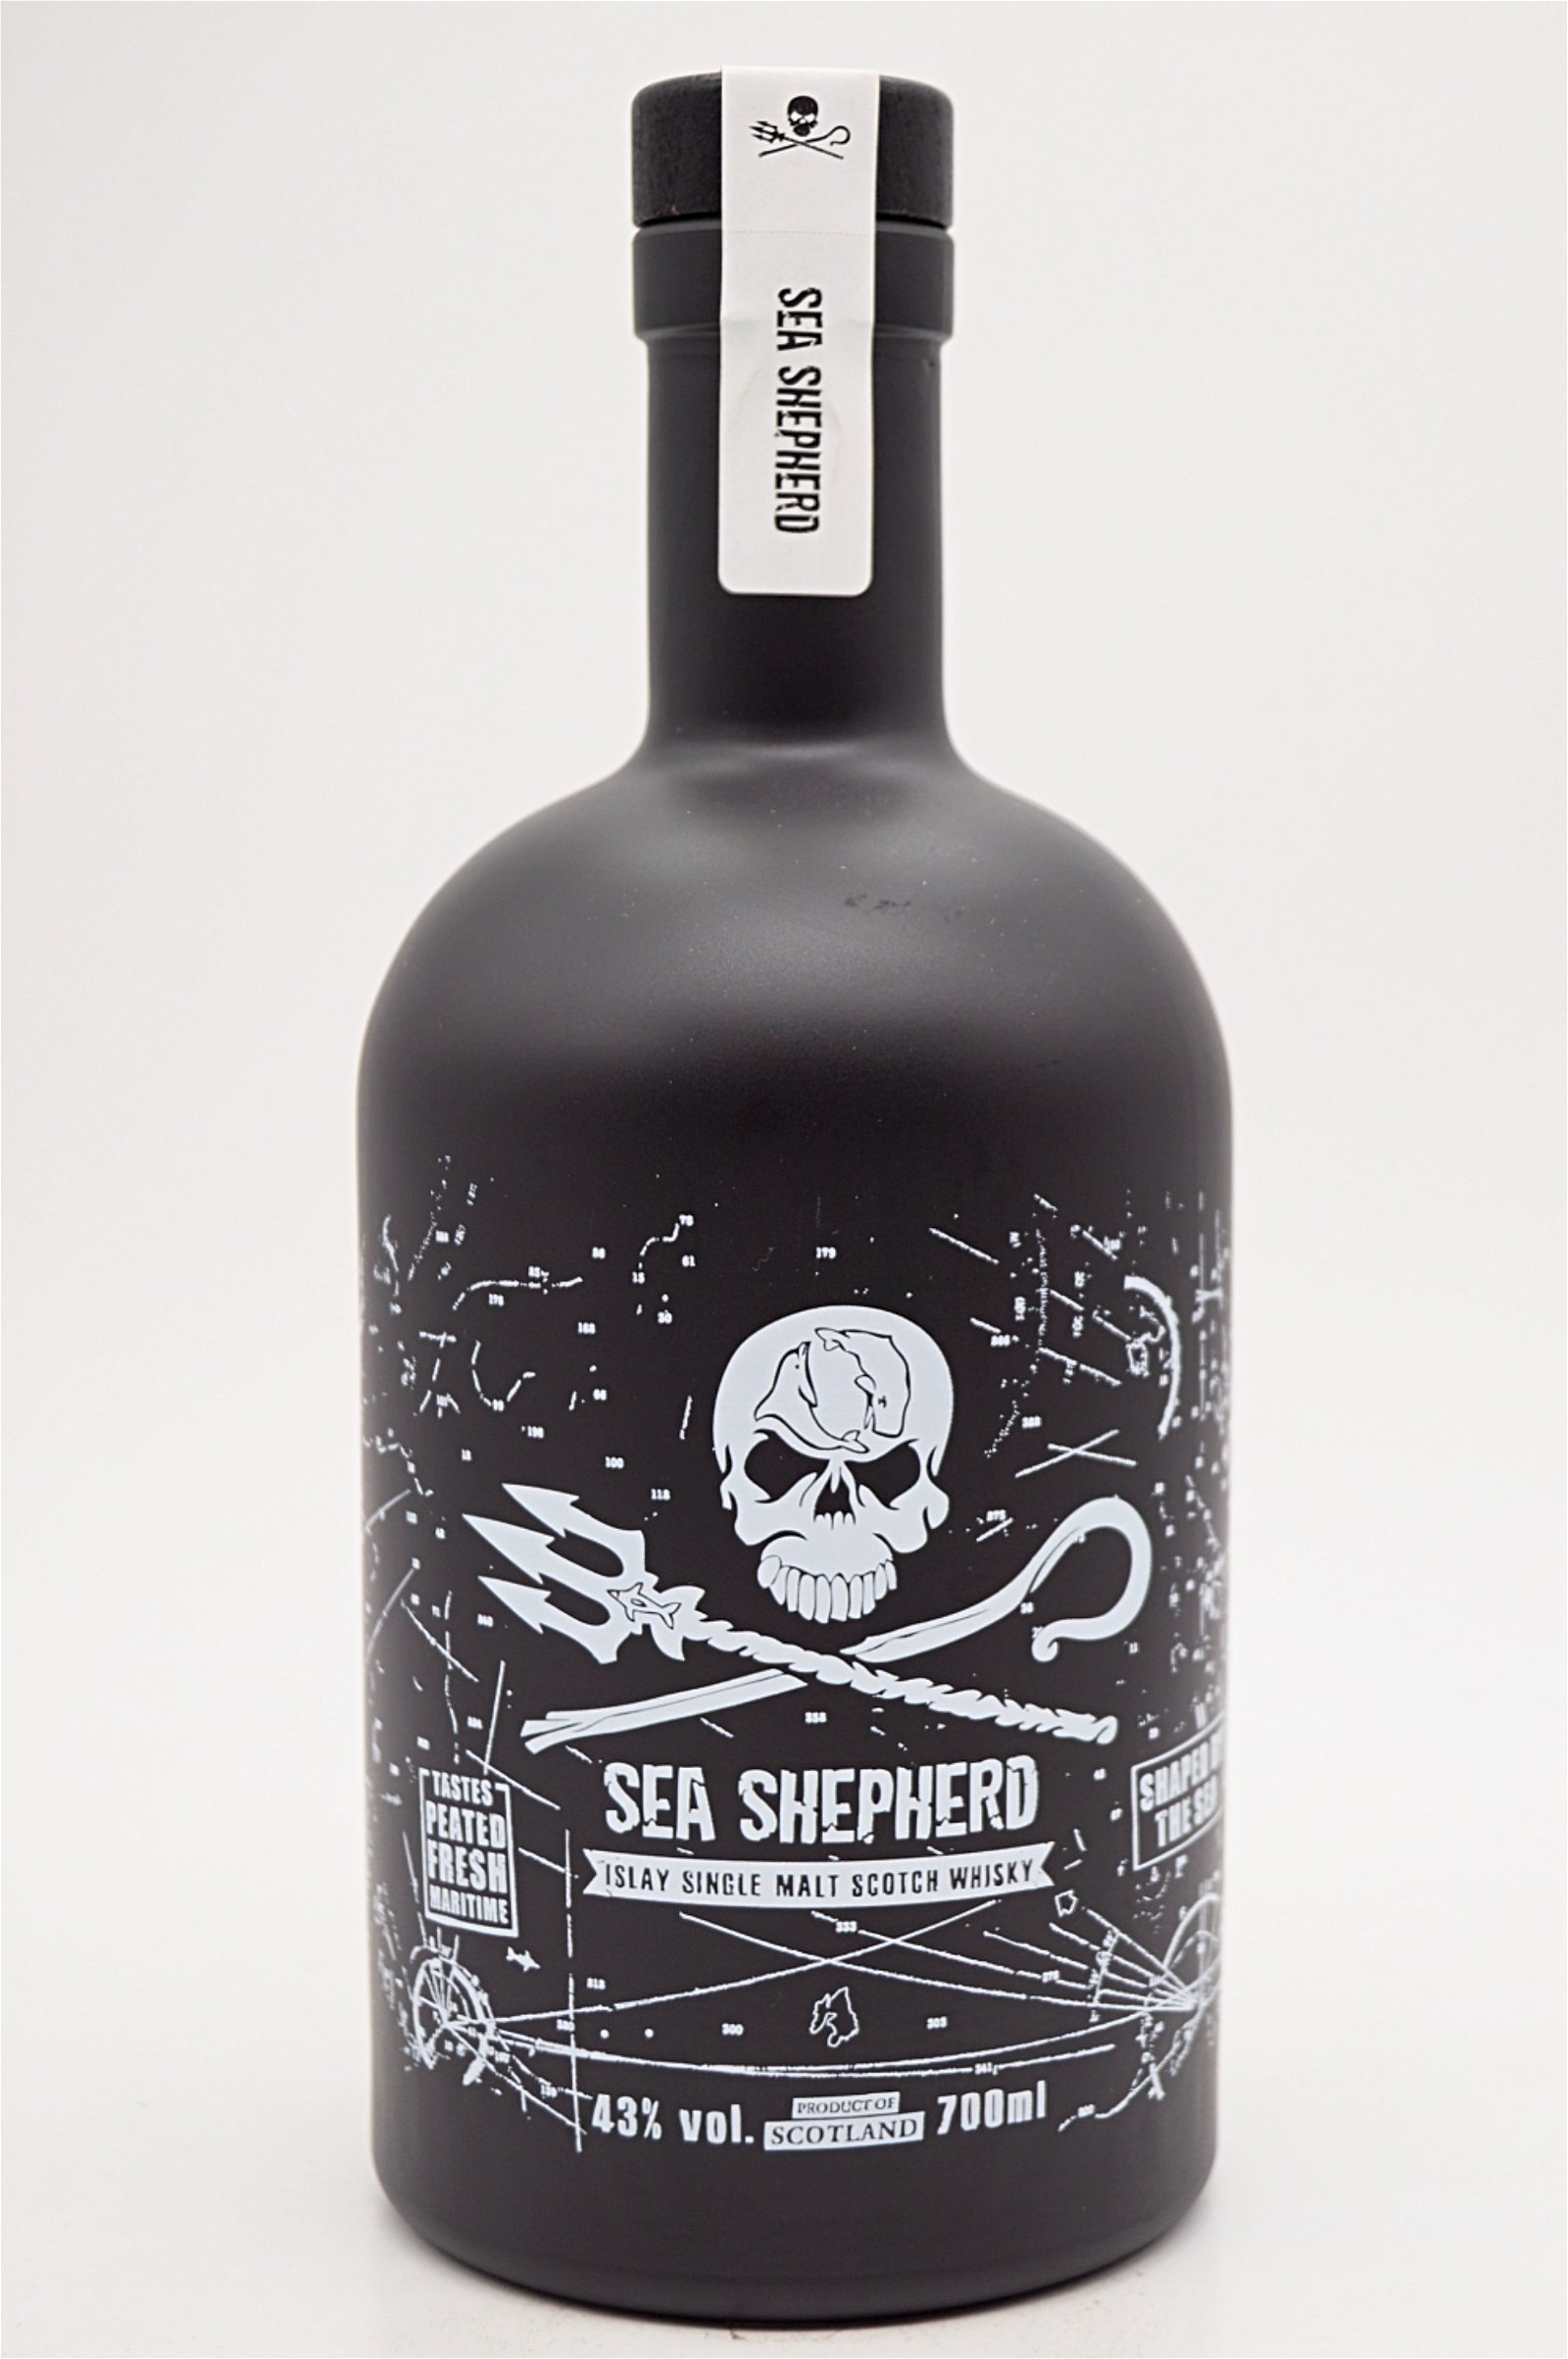 Sea Shepherd Islay Single Malt Scotch Whisky